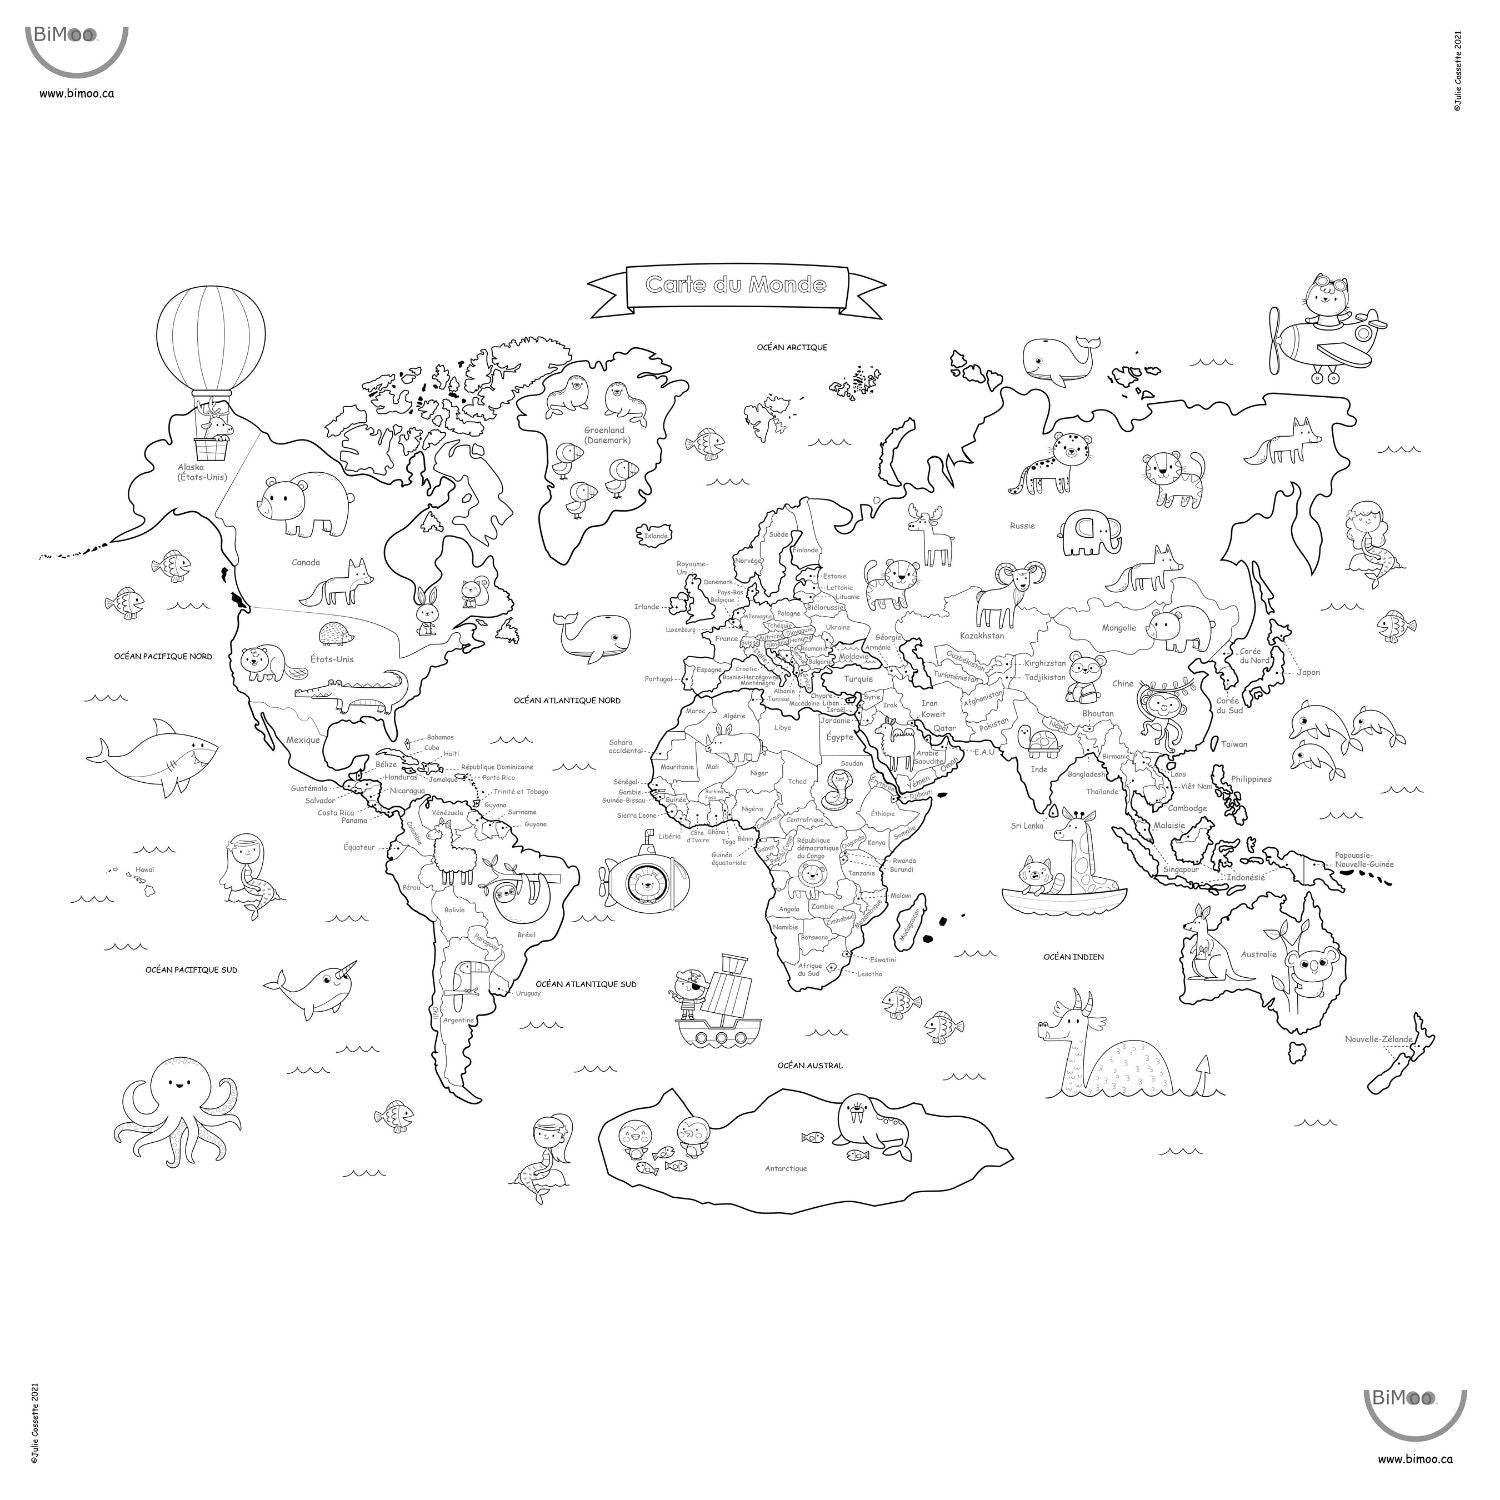 world map tablecloth design carte du monde nappe a colorier bimoo 45x45in